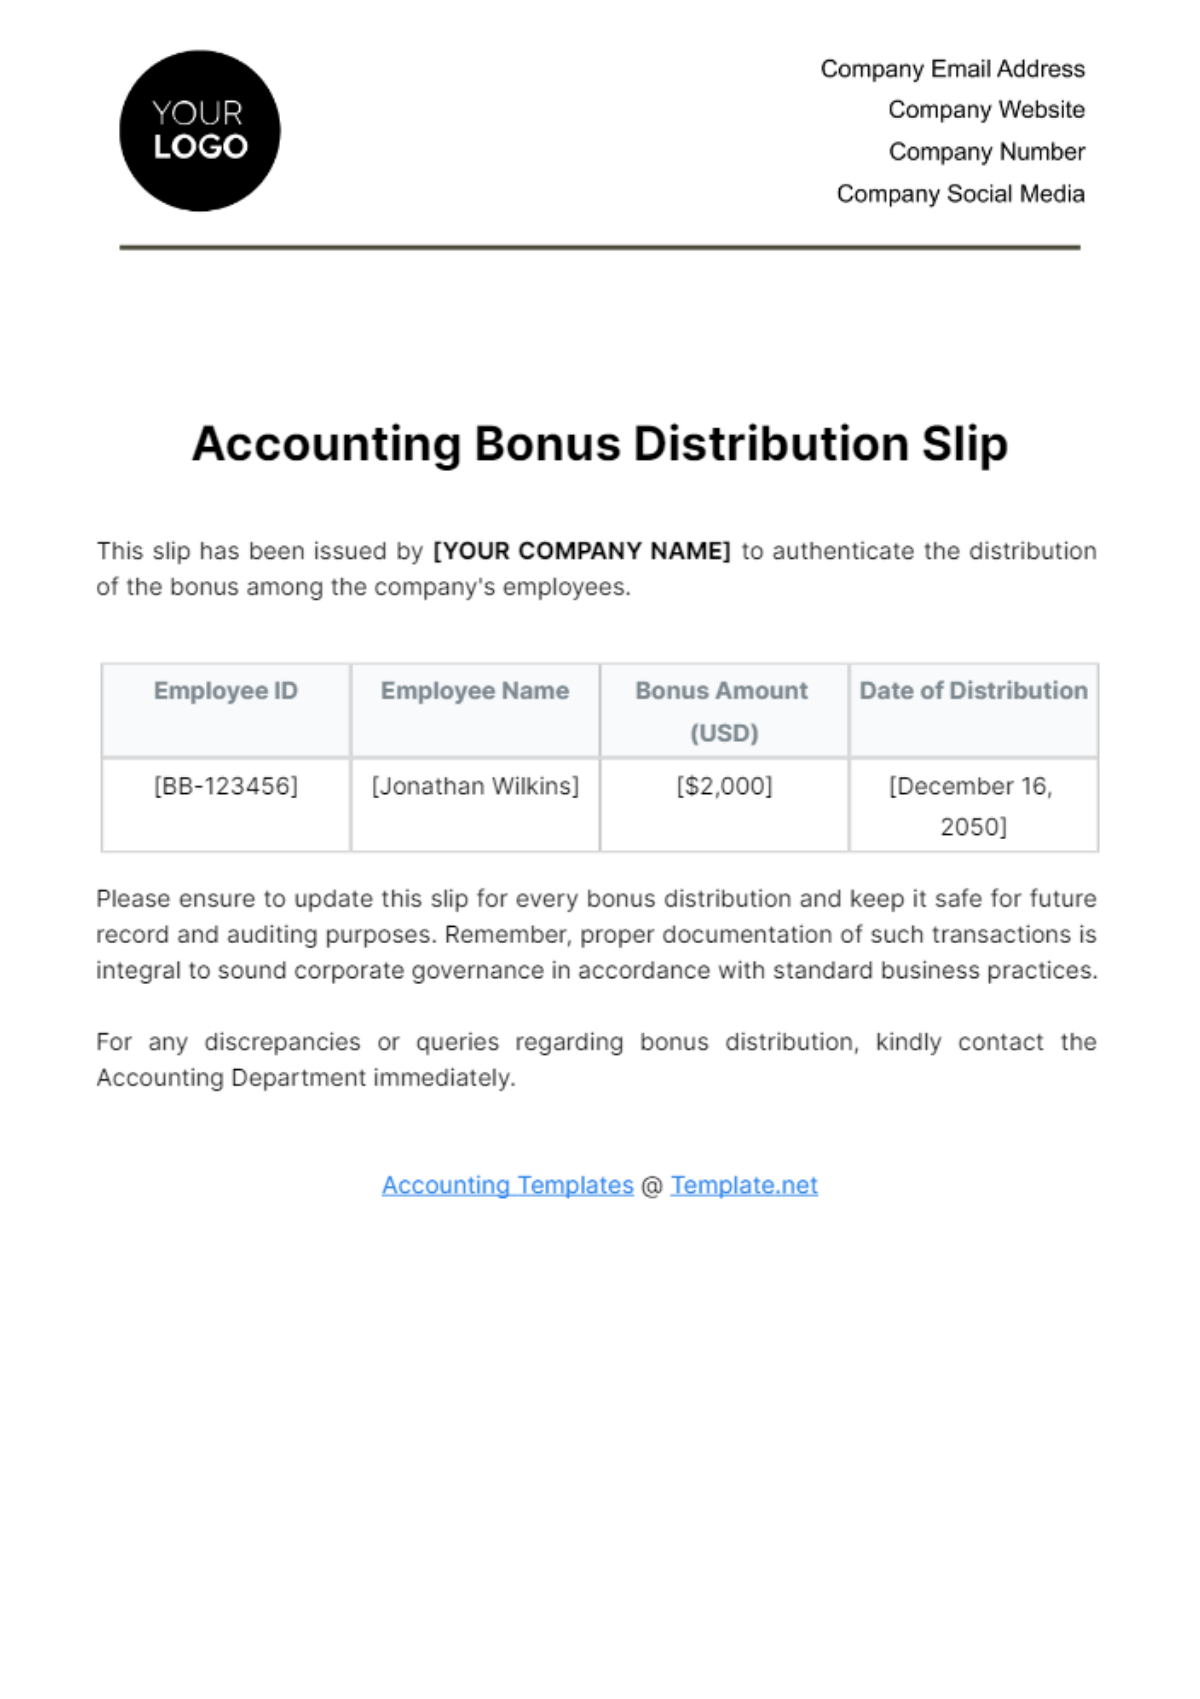 Accounting Bonus Distribution Slip Template